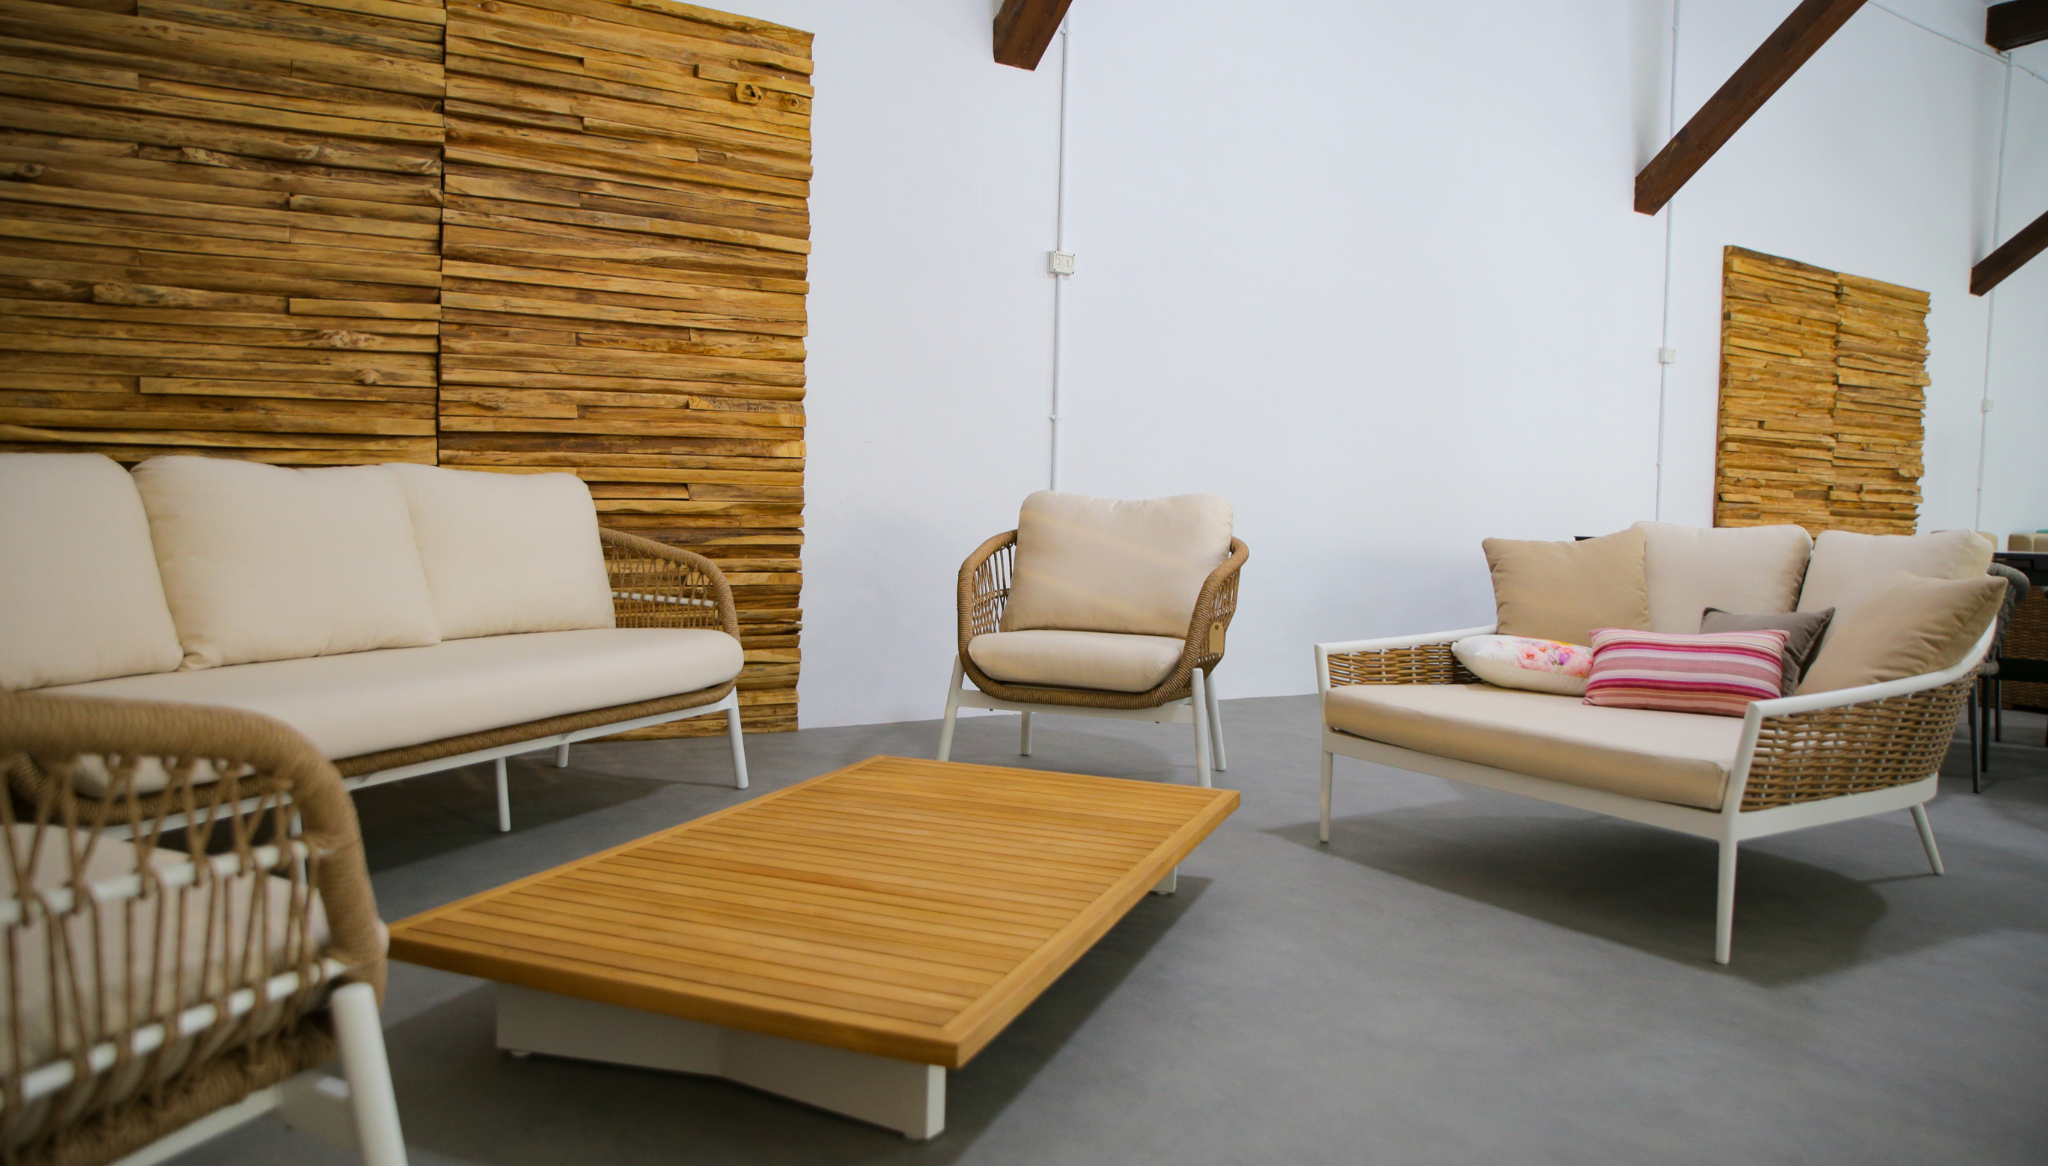 Sillones, sofás y mesas de exterior disponibles en Muebles Martínez